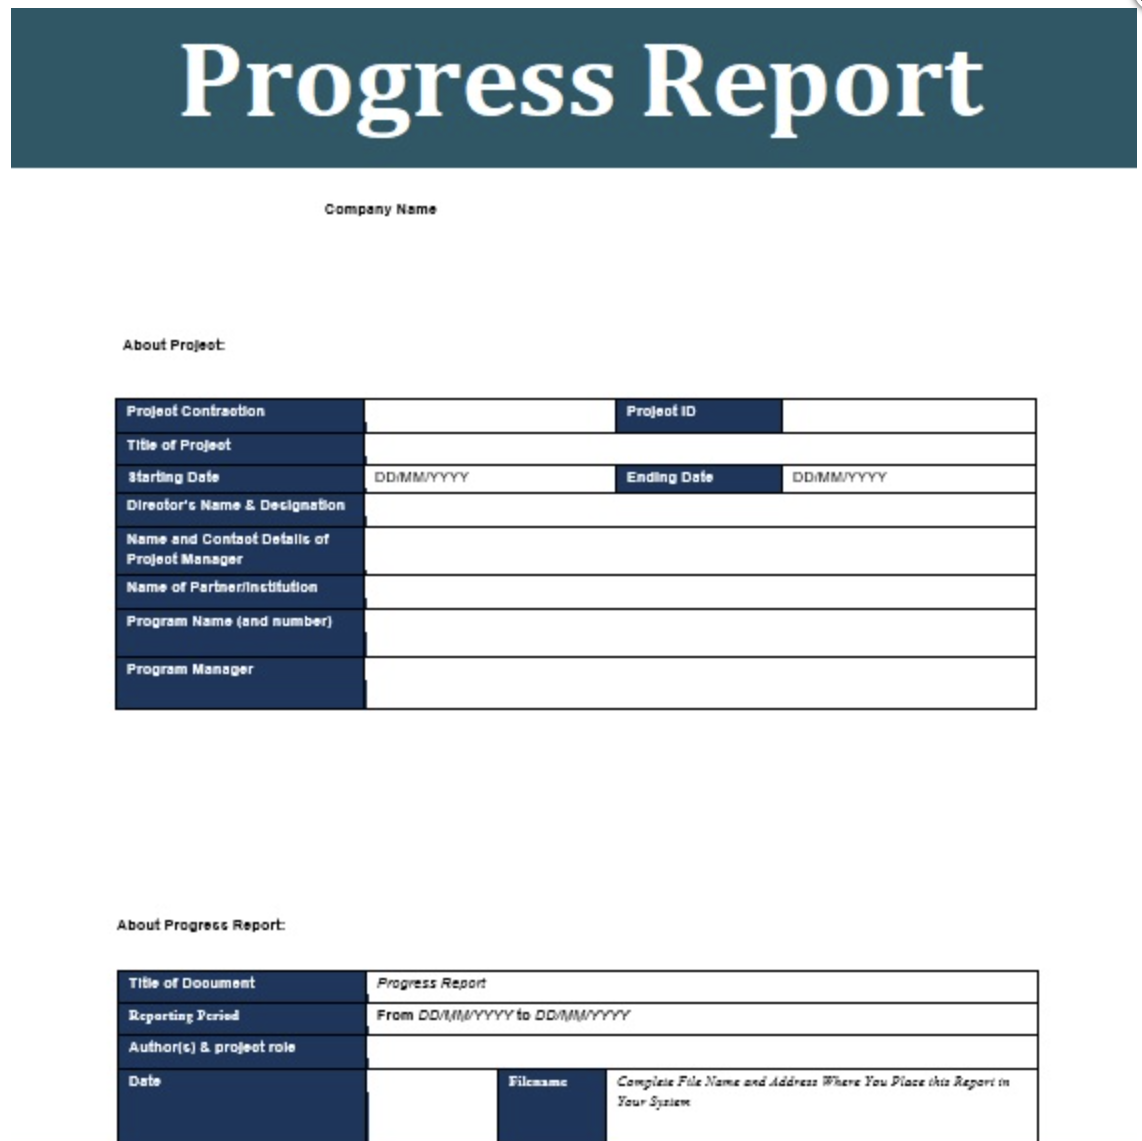 Template image of progress report